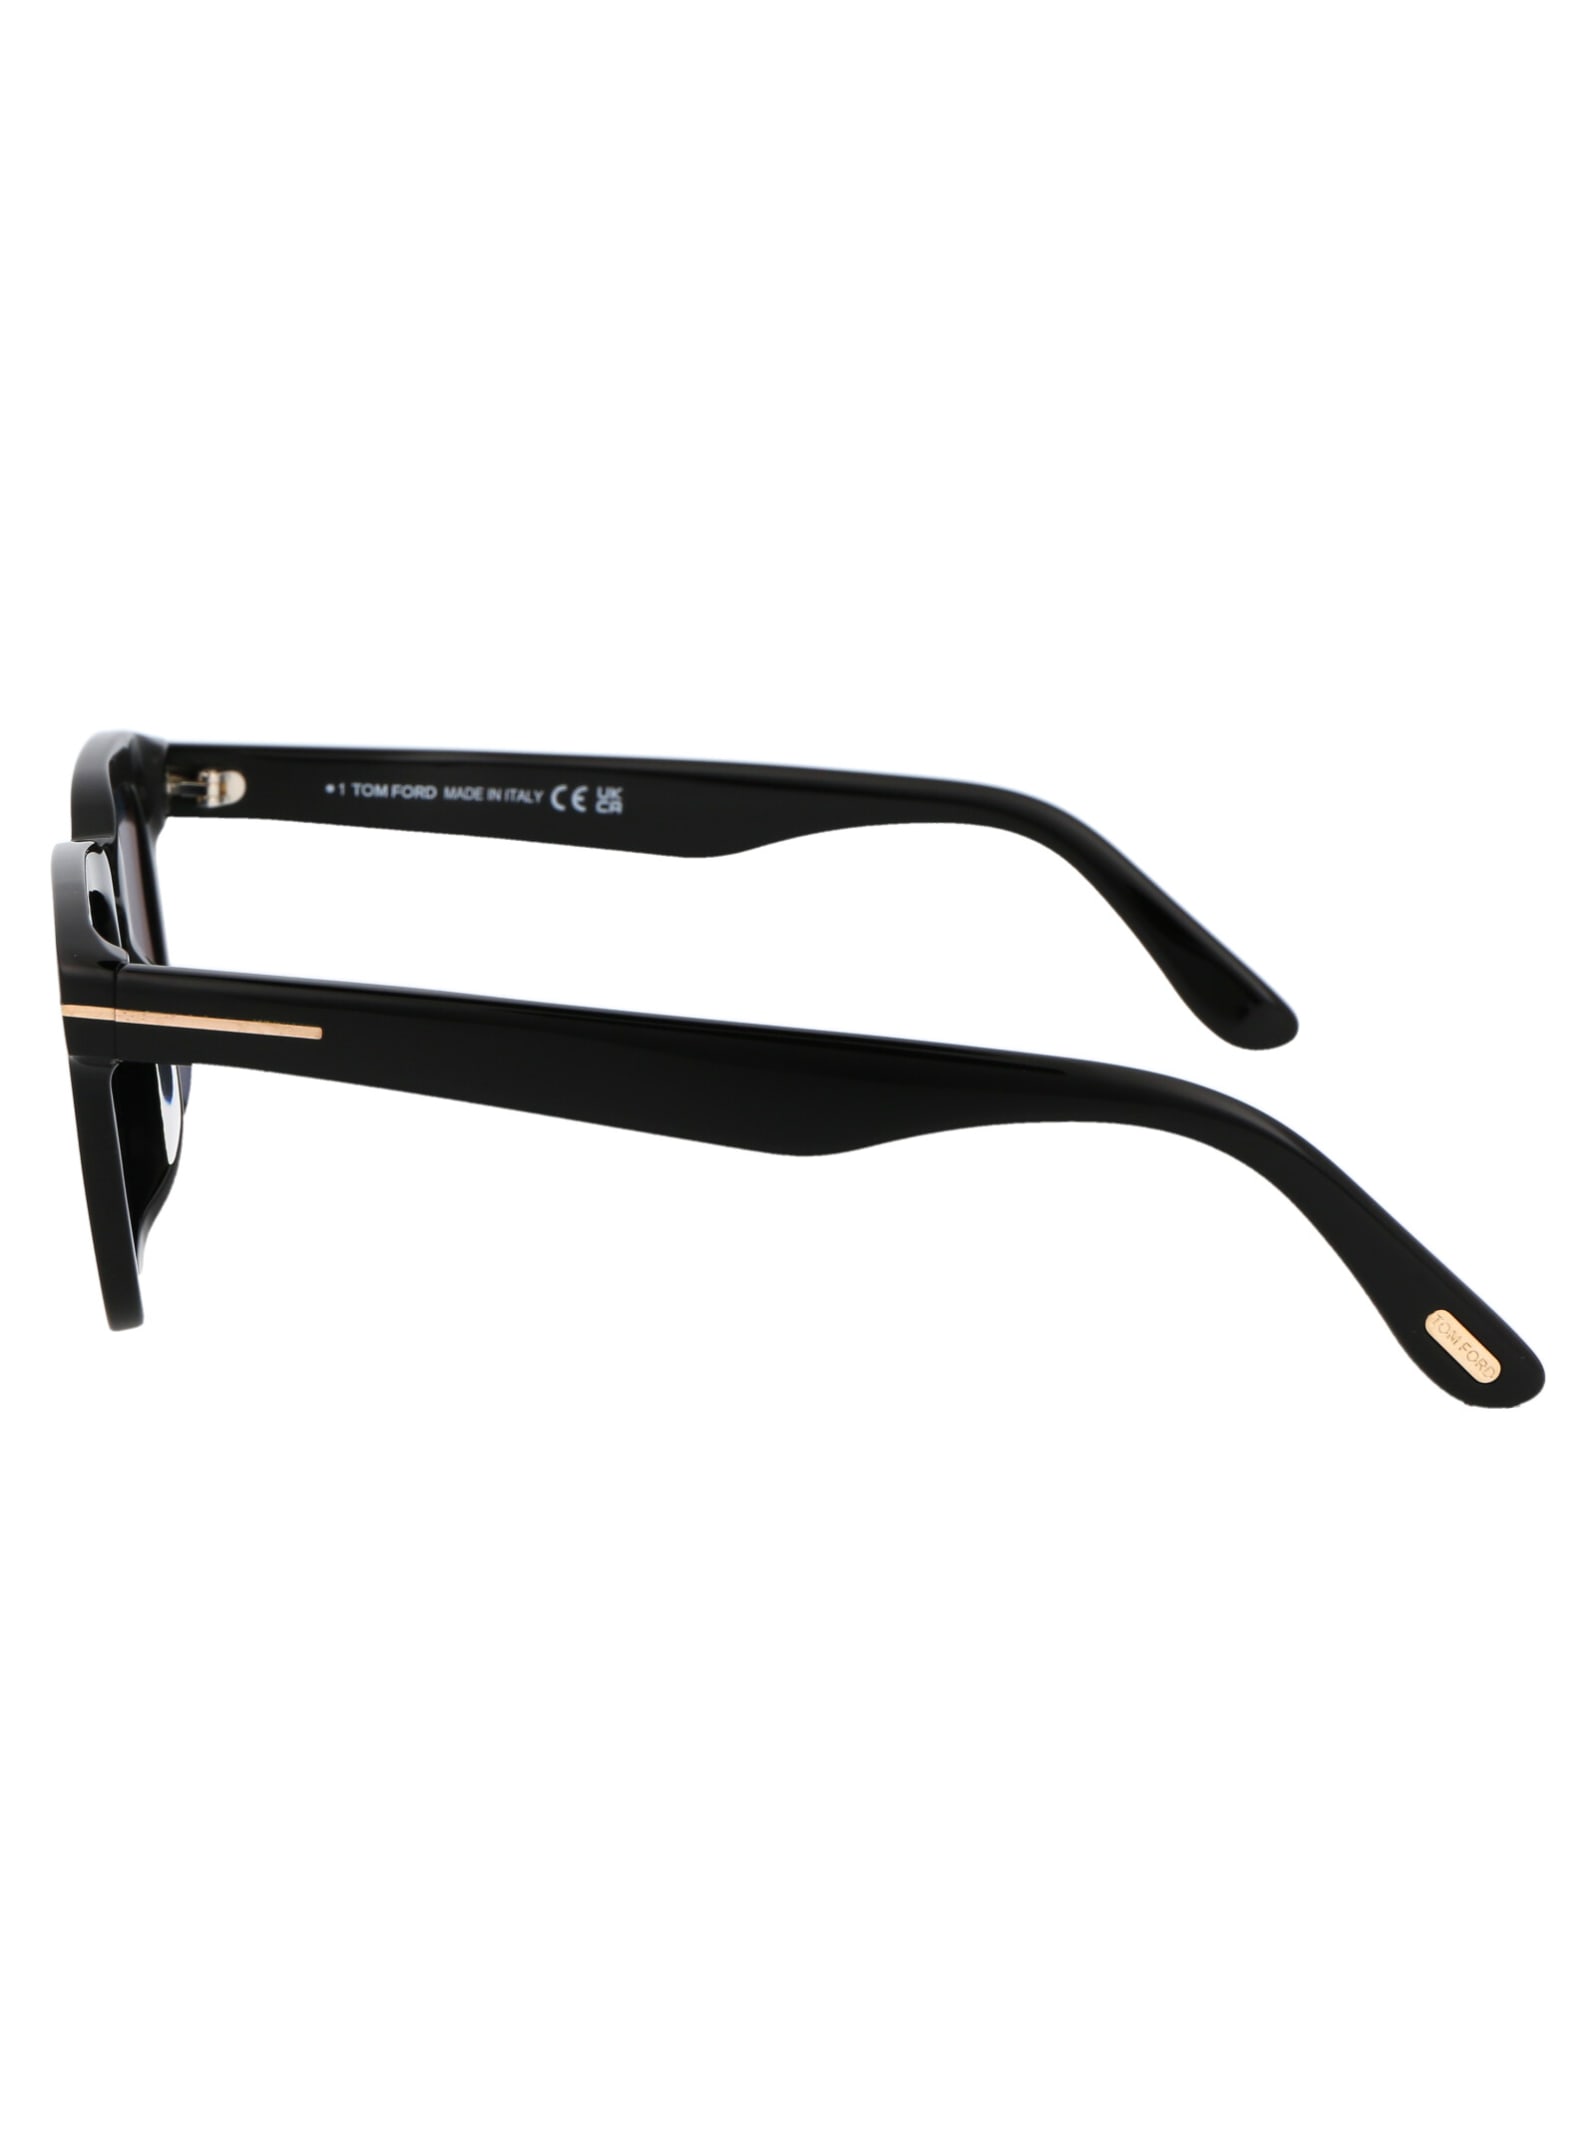 Shop Tom Ford Dax Sunglasses In 01v Nero Lucido / Blu